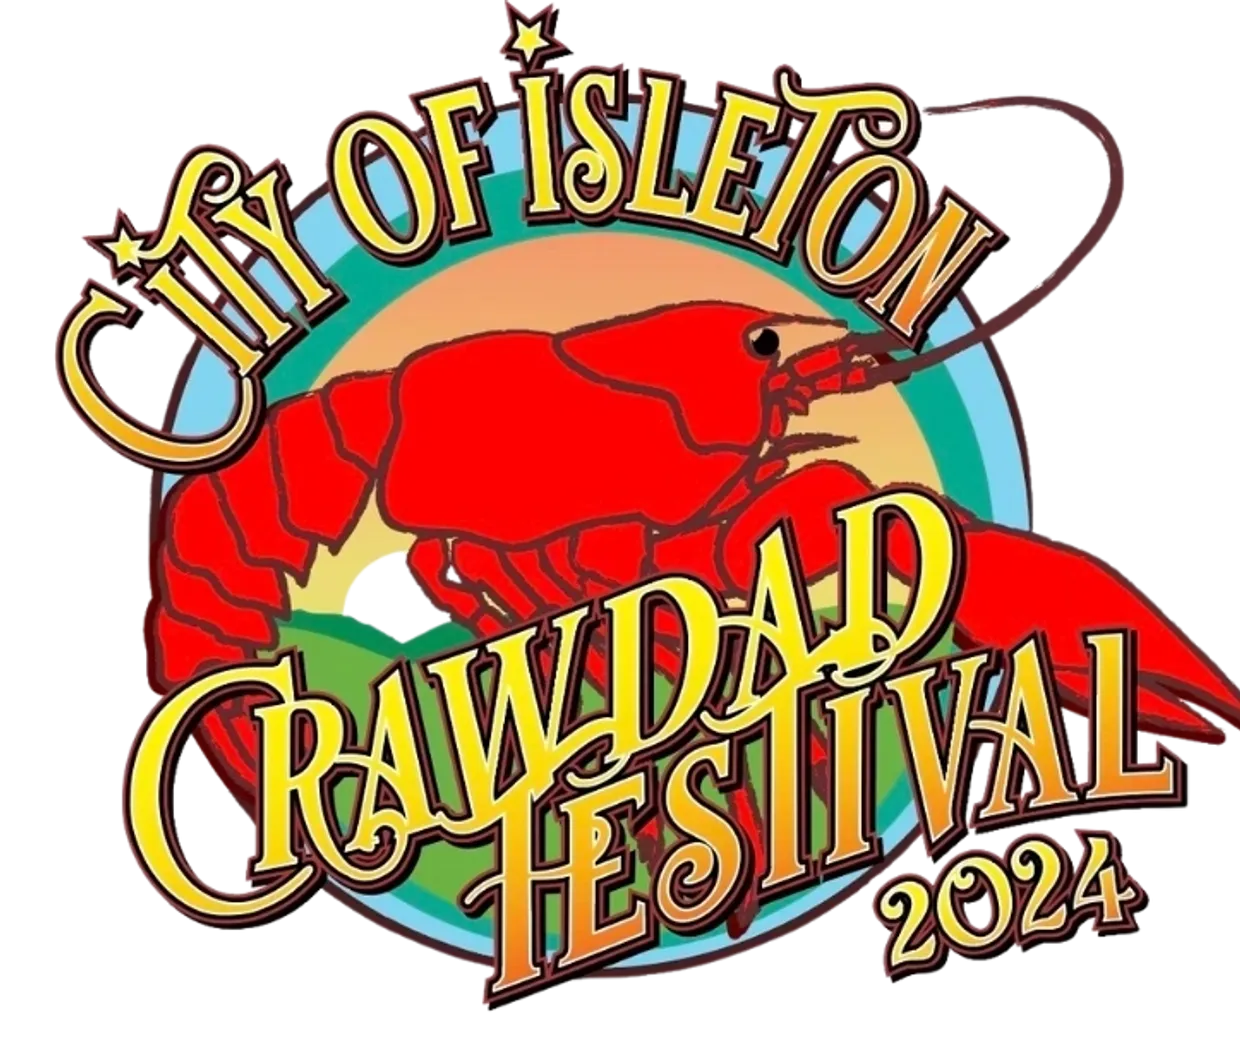 City of Isleton Crawdad Festival